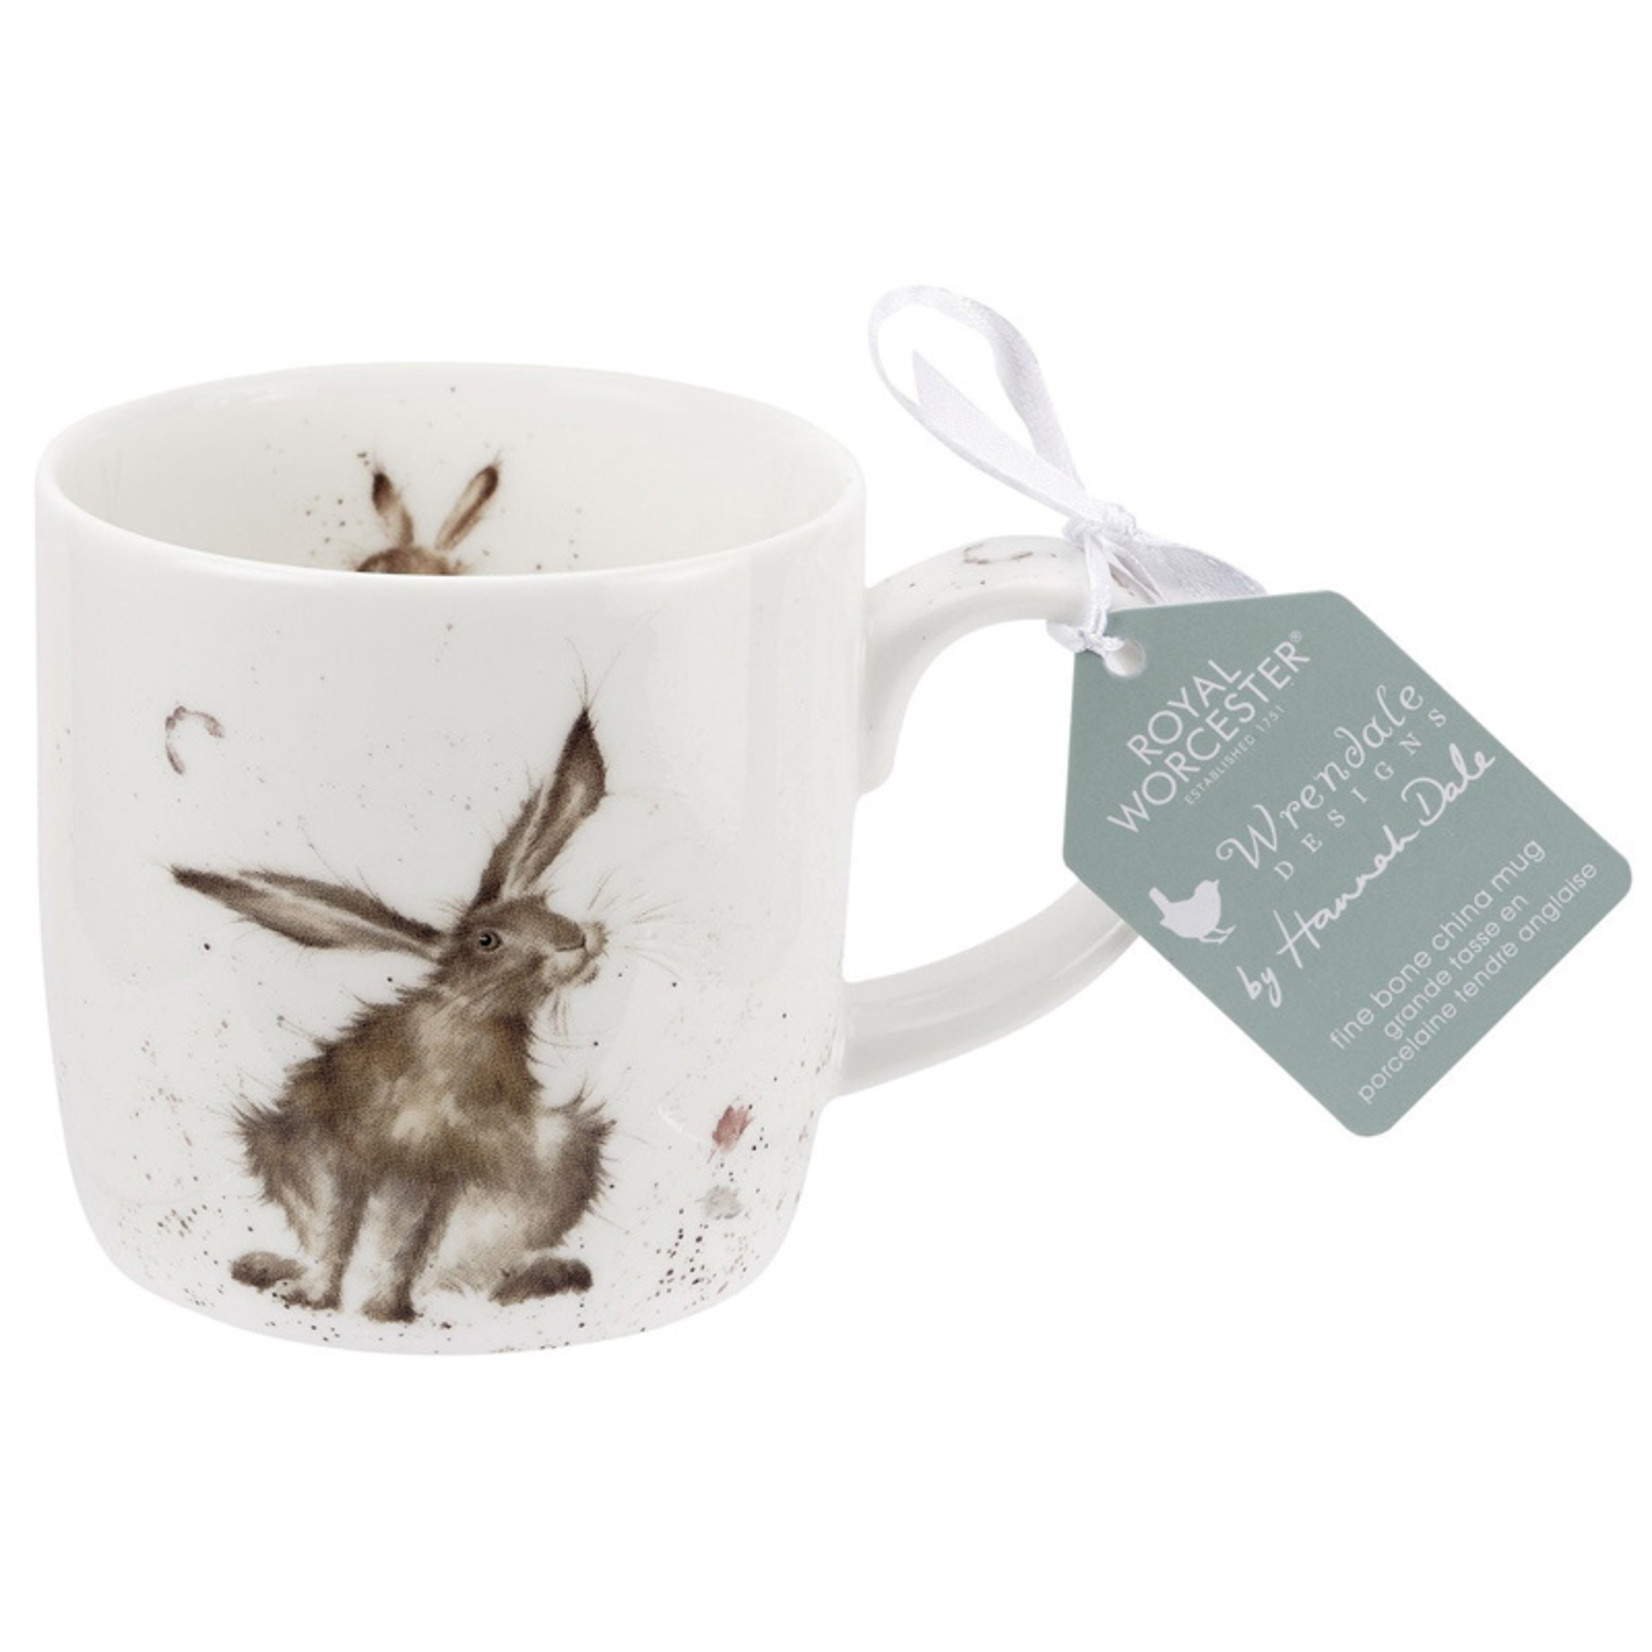 Wrendale Mug - Good Hare Day